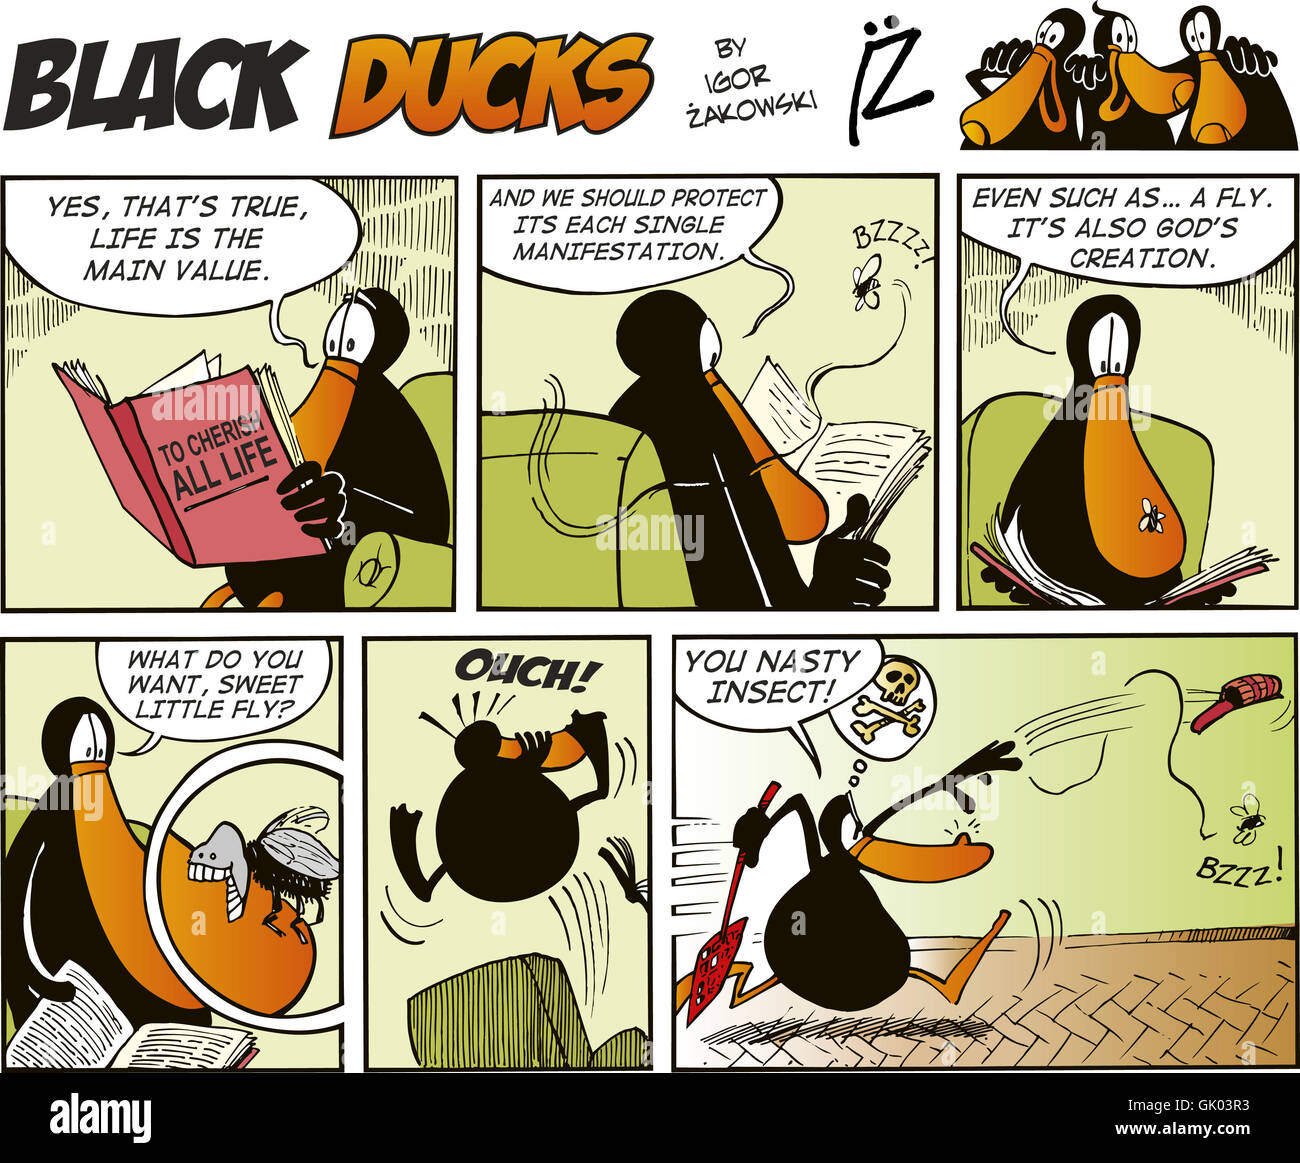 Black Ducks Comics episode 36 Stock Photo